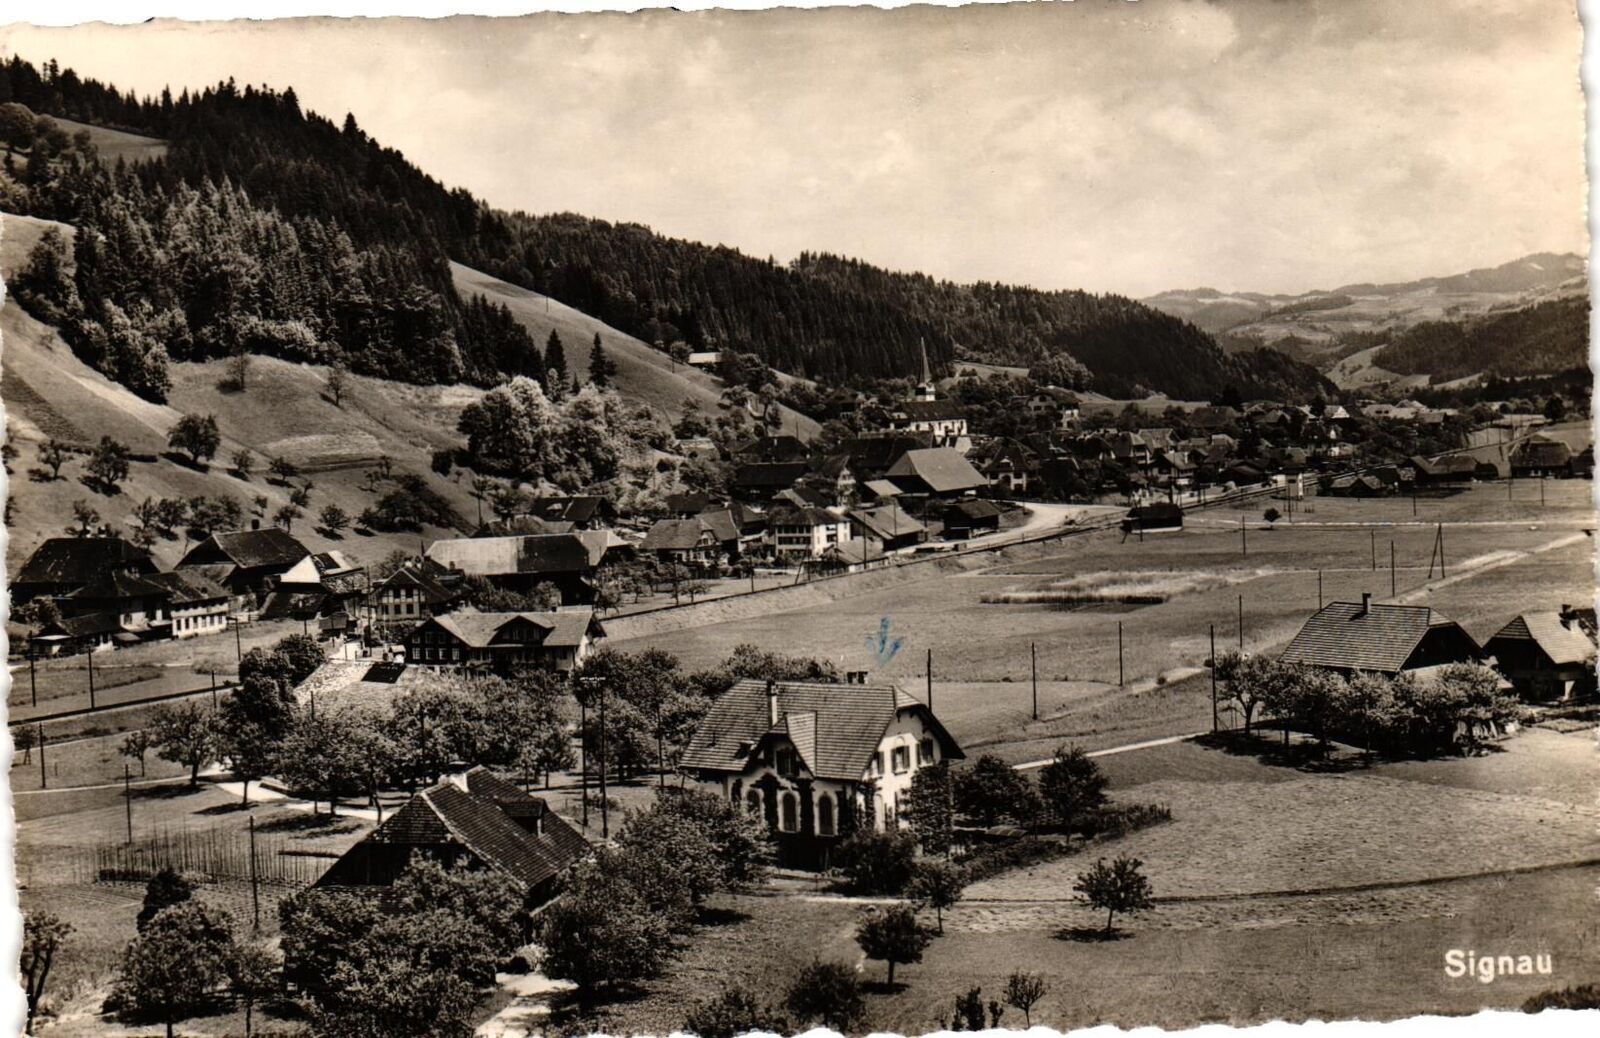 VTG Postcard RPPC- Town, Signau Early 1900s